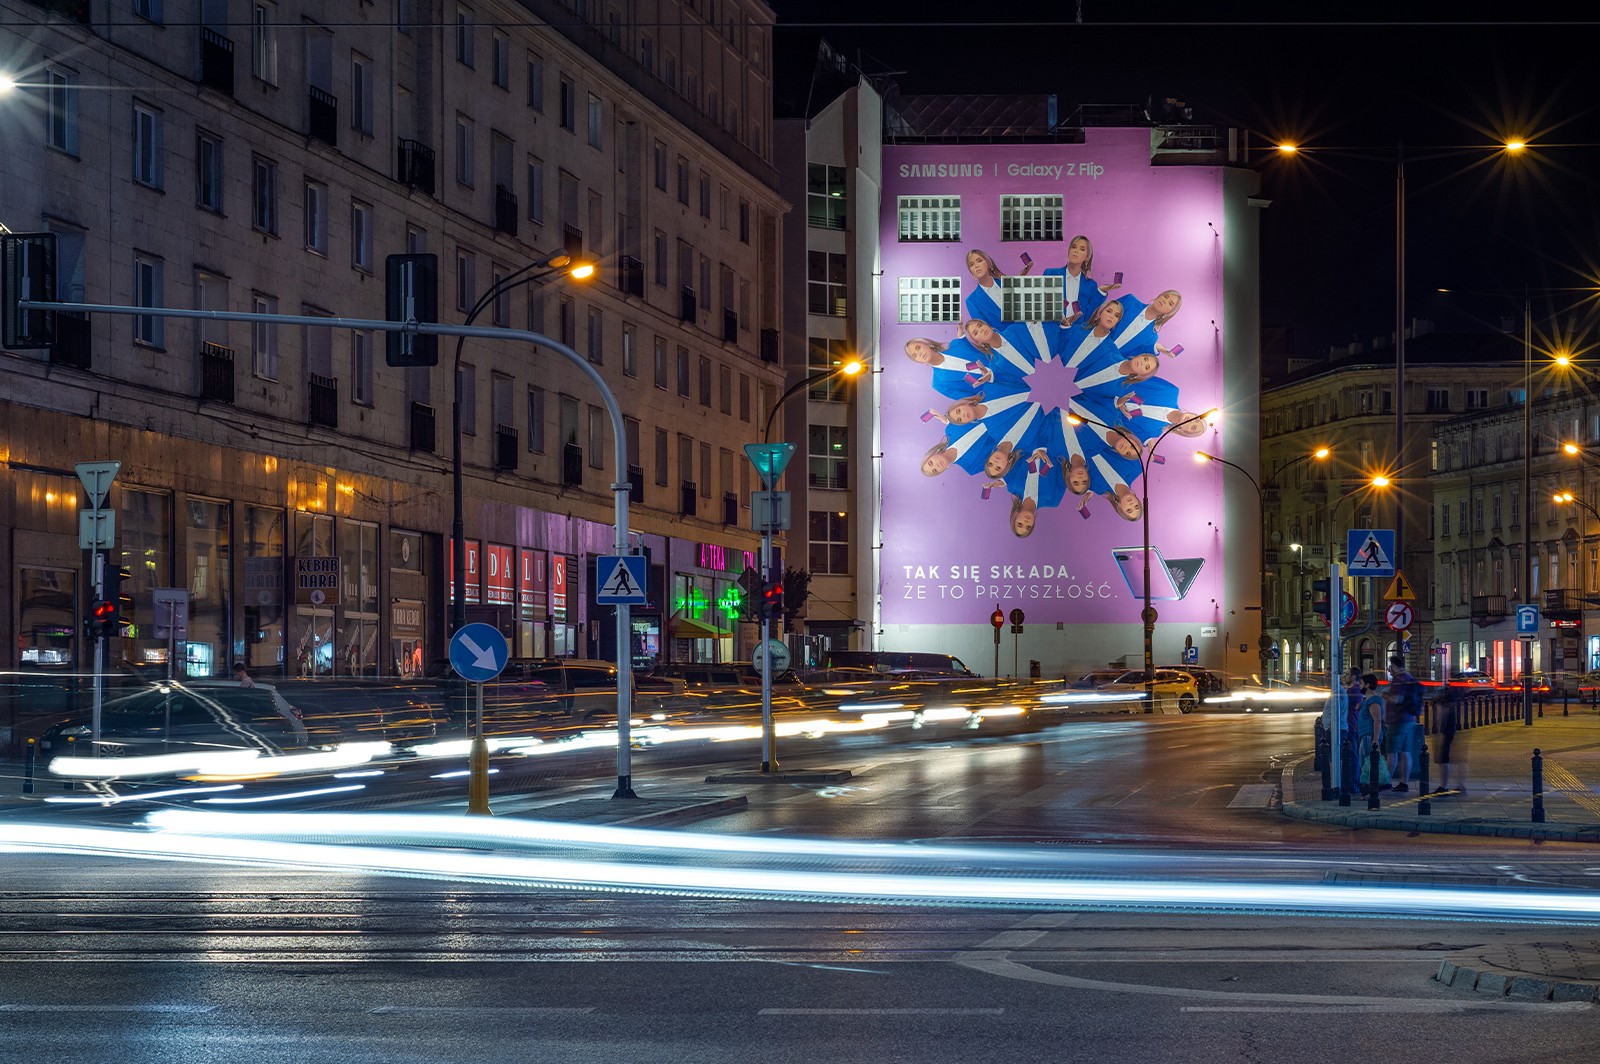 Advertising mural for Samsung Polska on Bracka street in Warsaw | Samsung Galaxy Z Flip | Portfolio